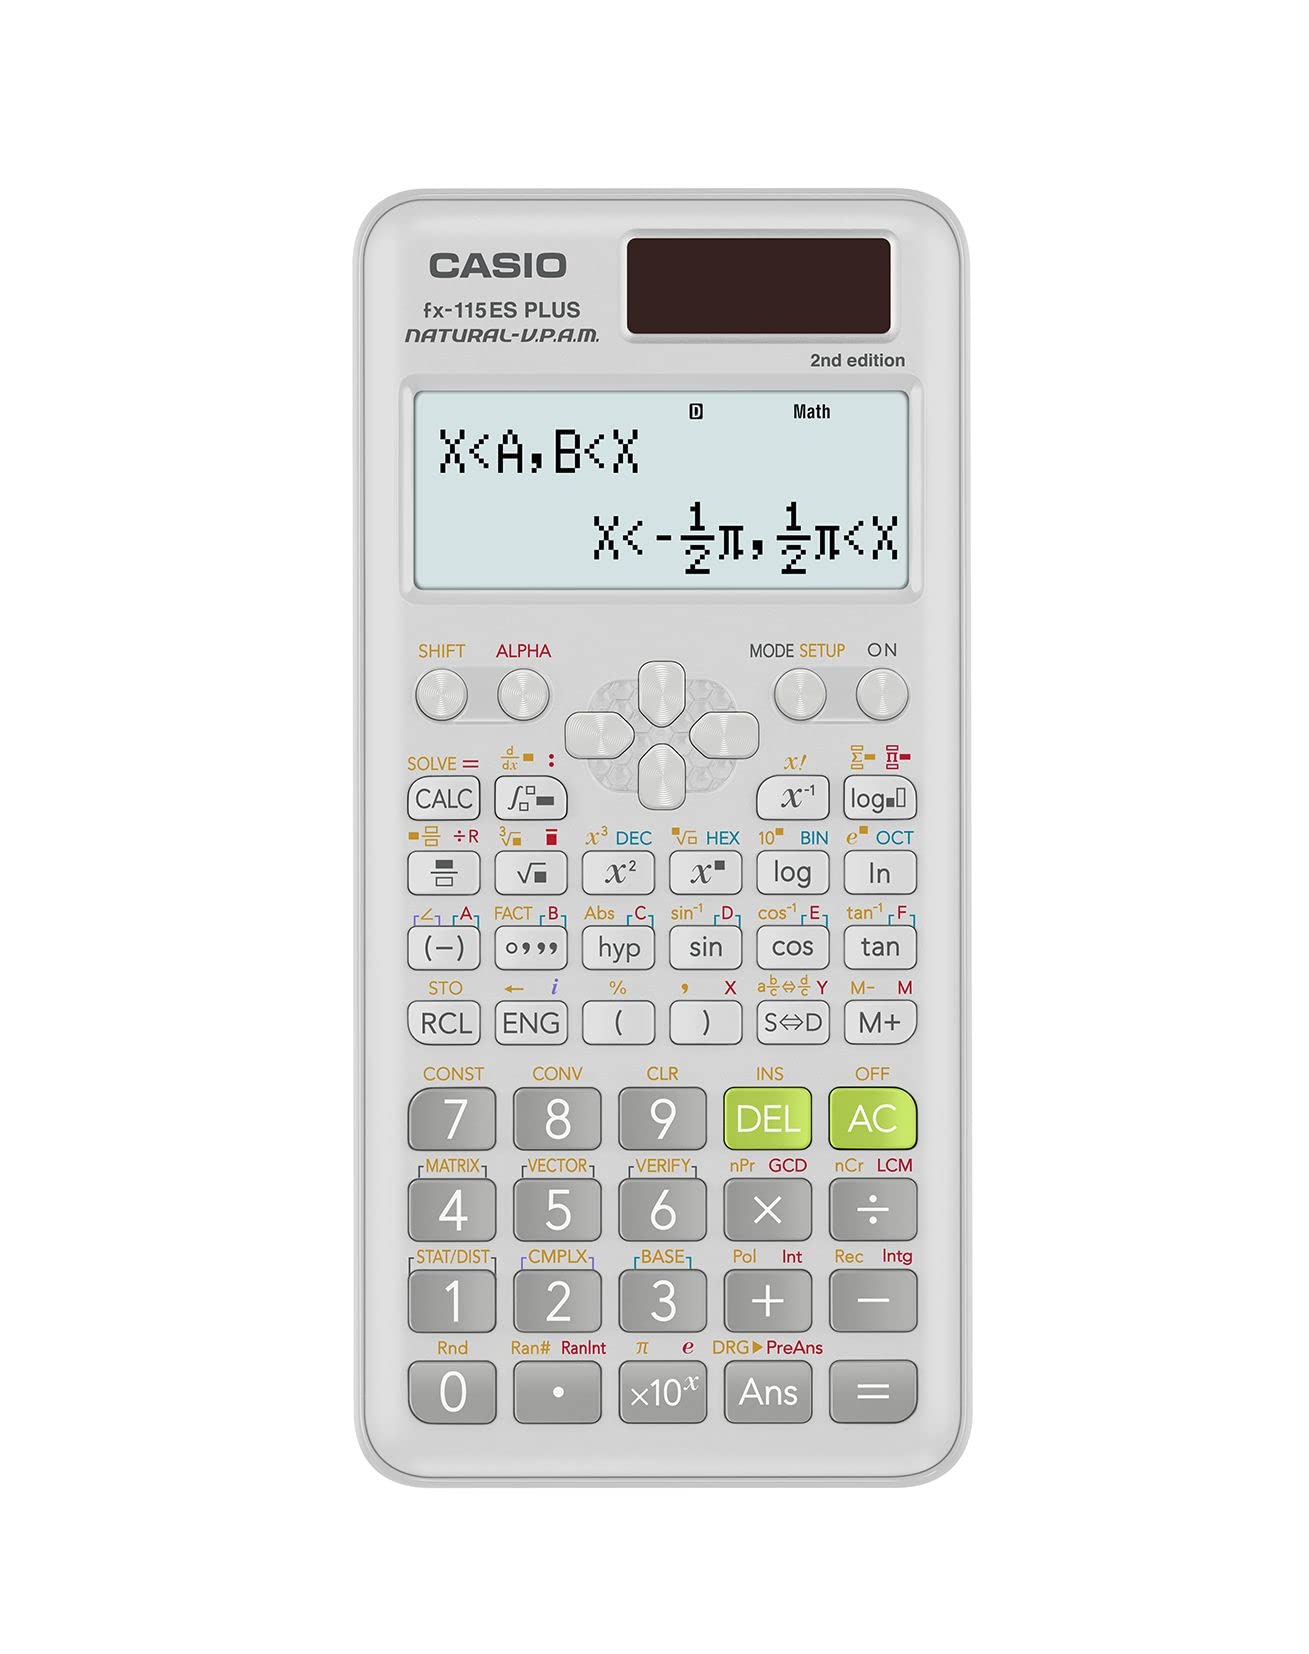 Mua Casio fx-115ESPLUS2 2nd Edition, Advanced Scientific Calculator trên  Amazon Mỹ chính hãng 2023 | Giaonhan247